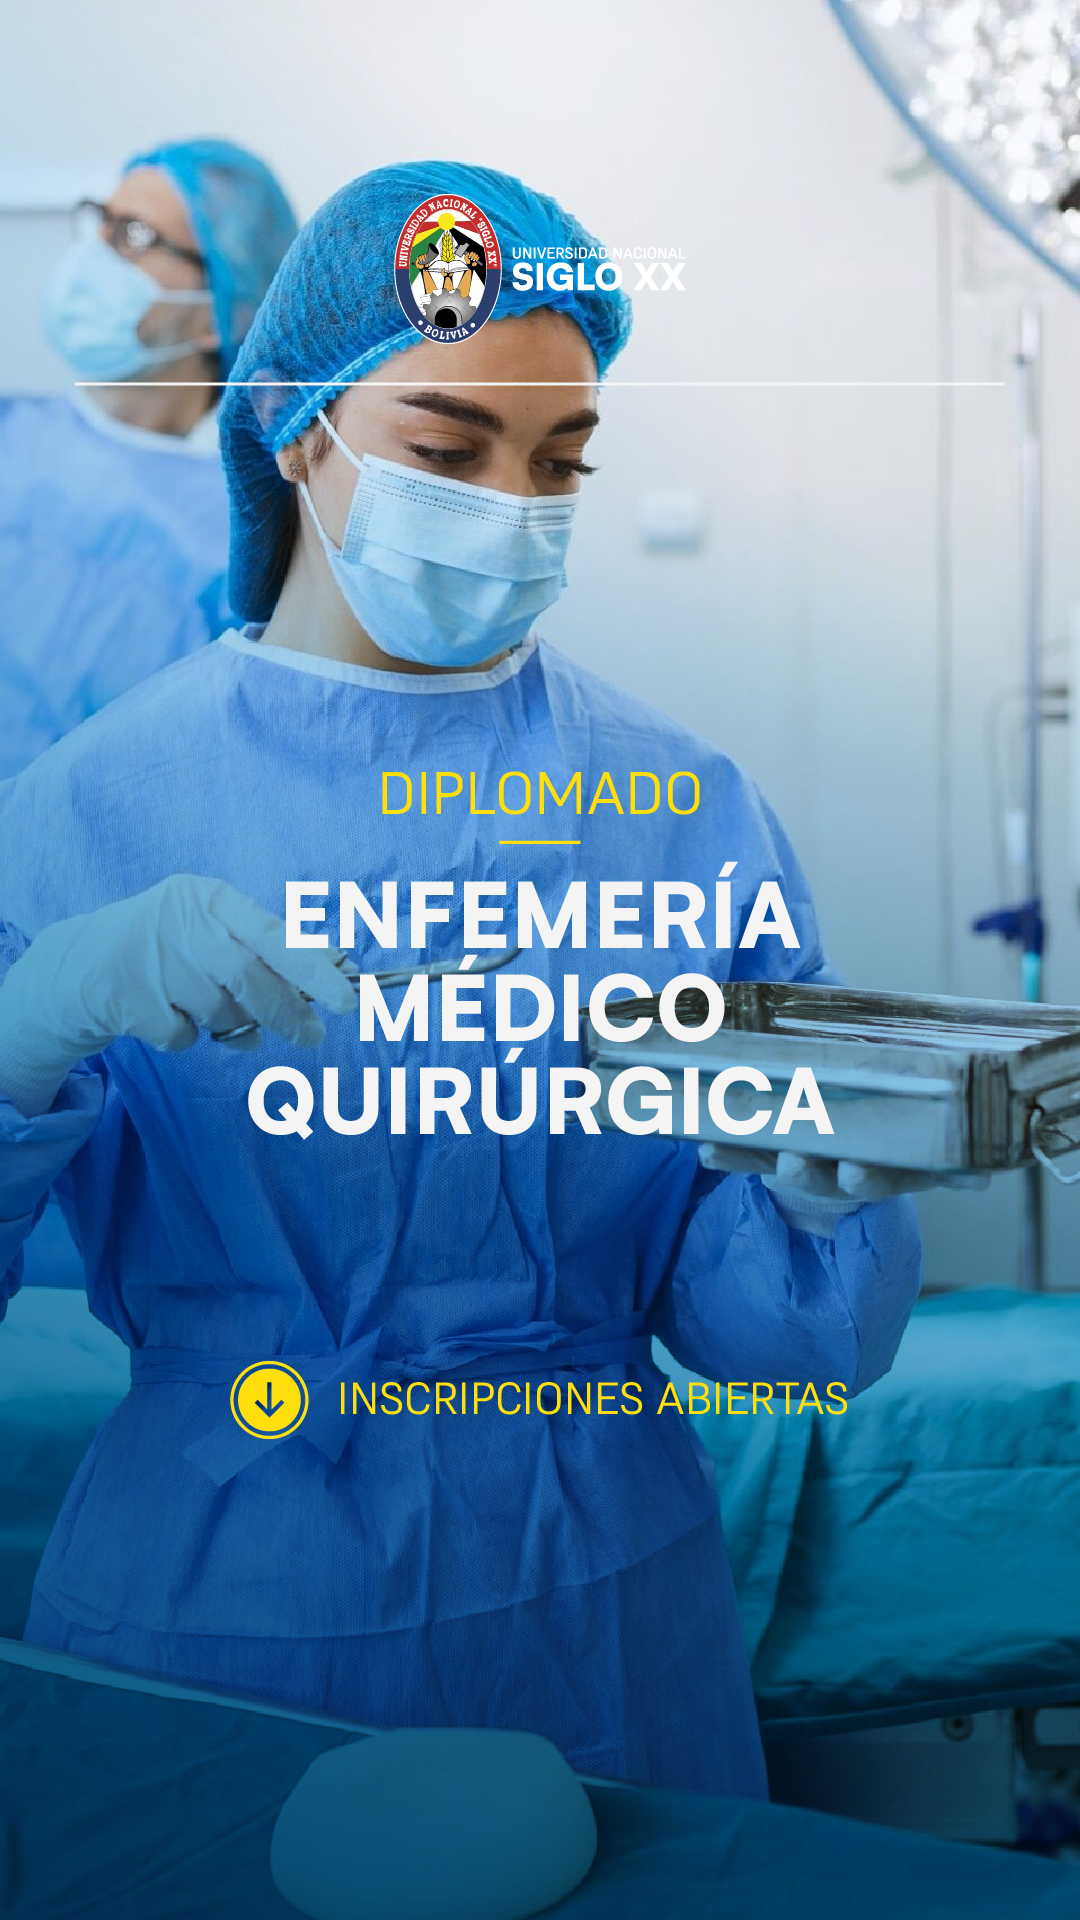 Diplomado DIPLOMADO EN ENFERMERIA MEDICO QUIRURGICA